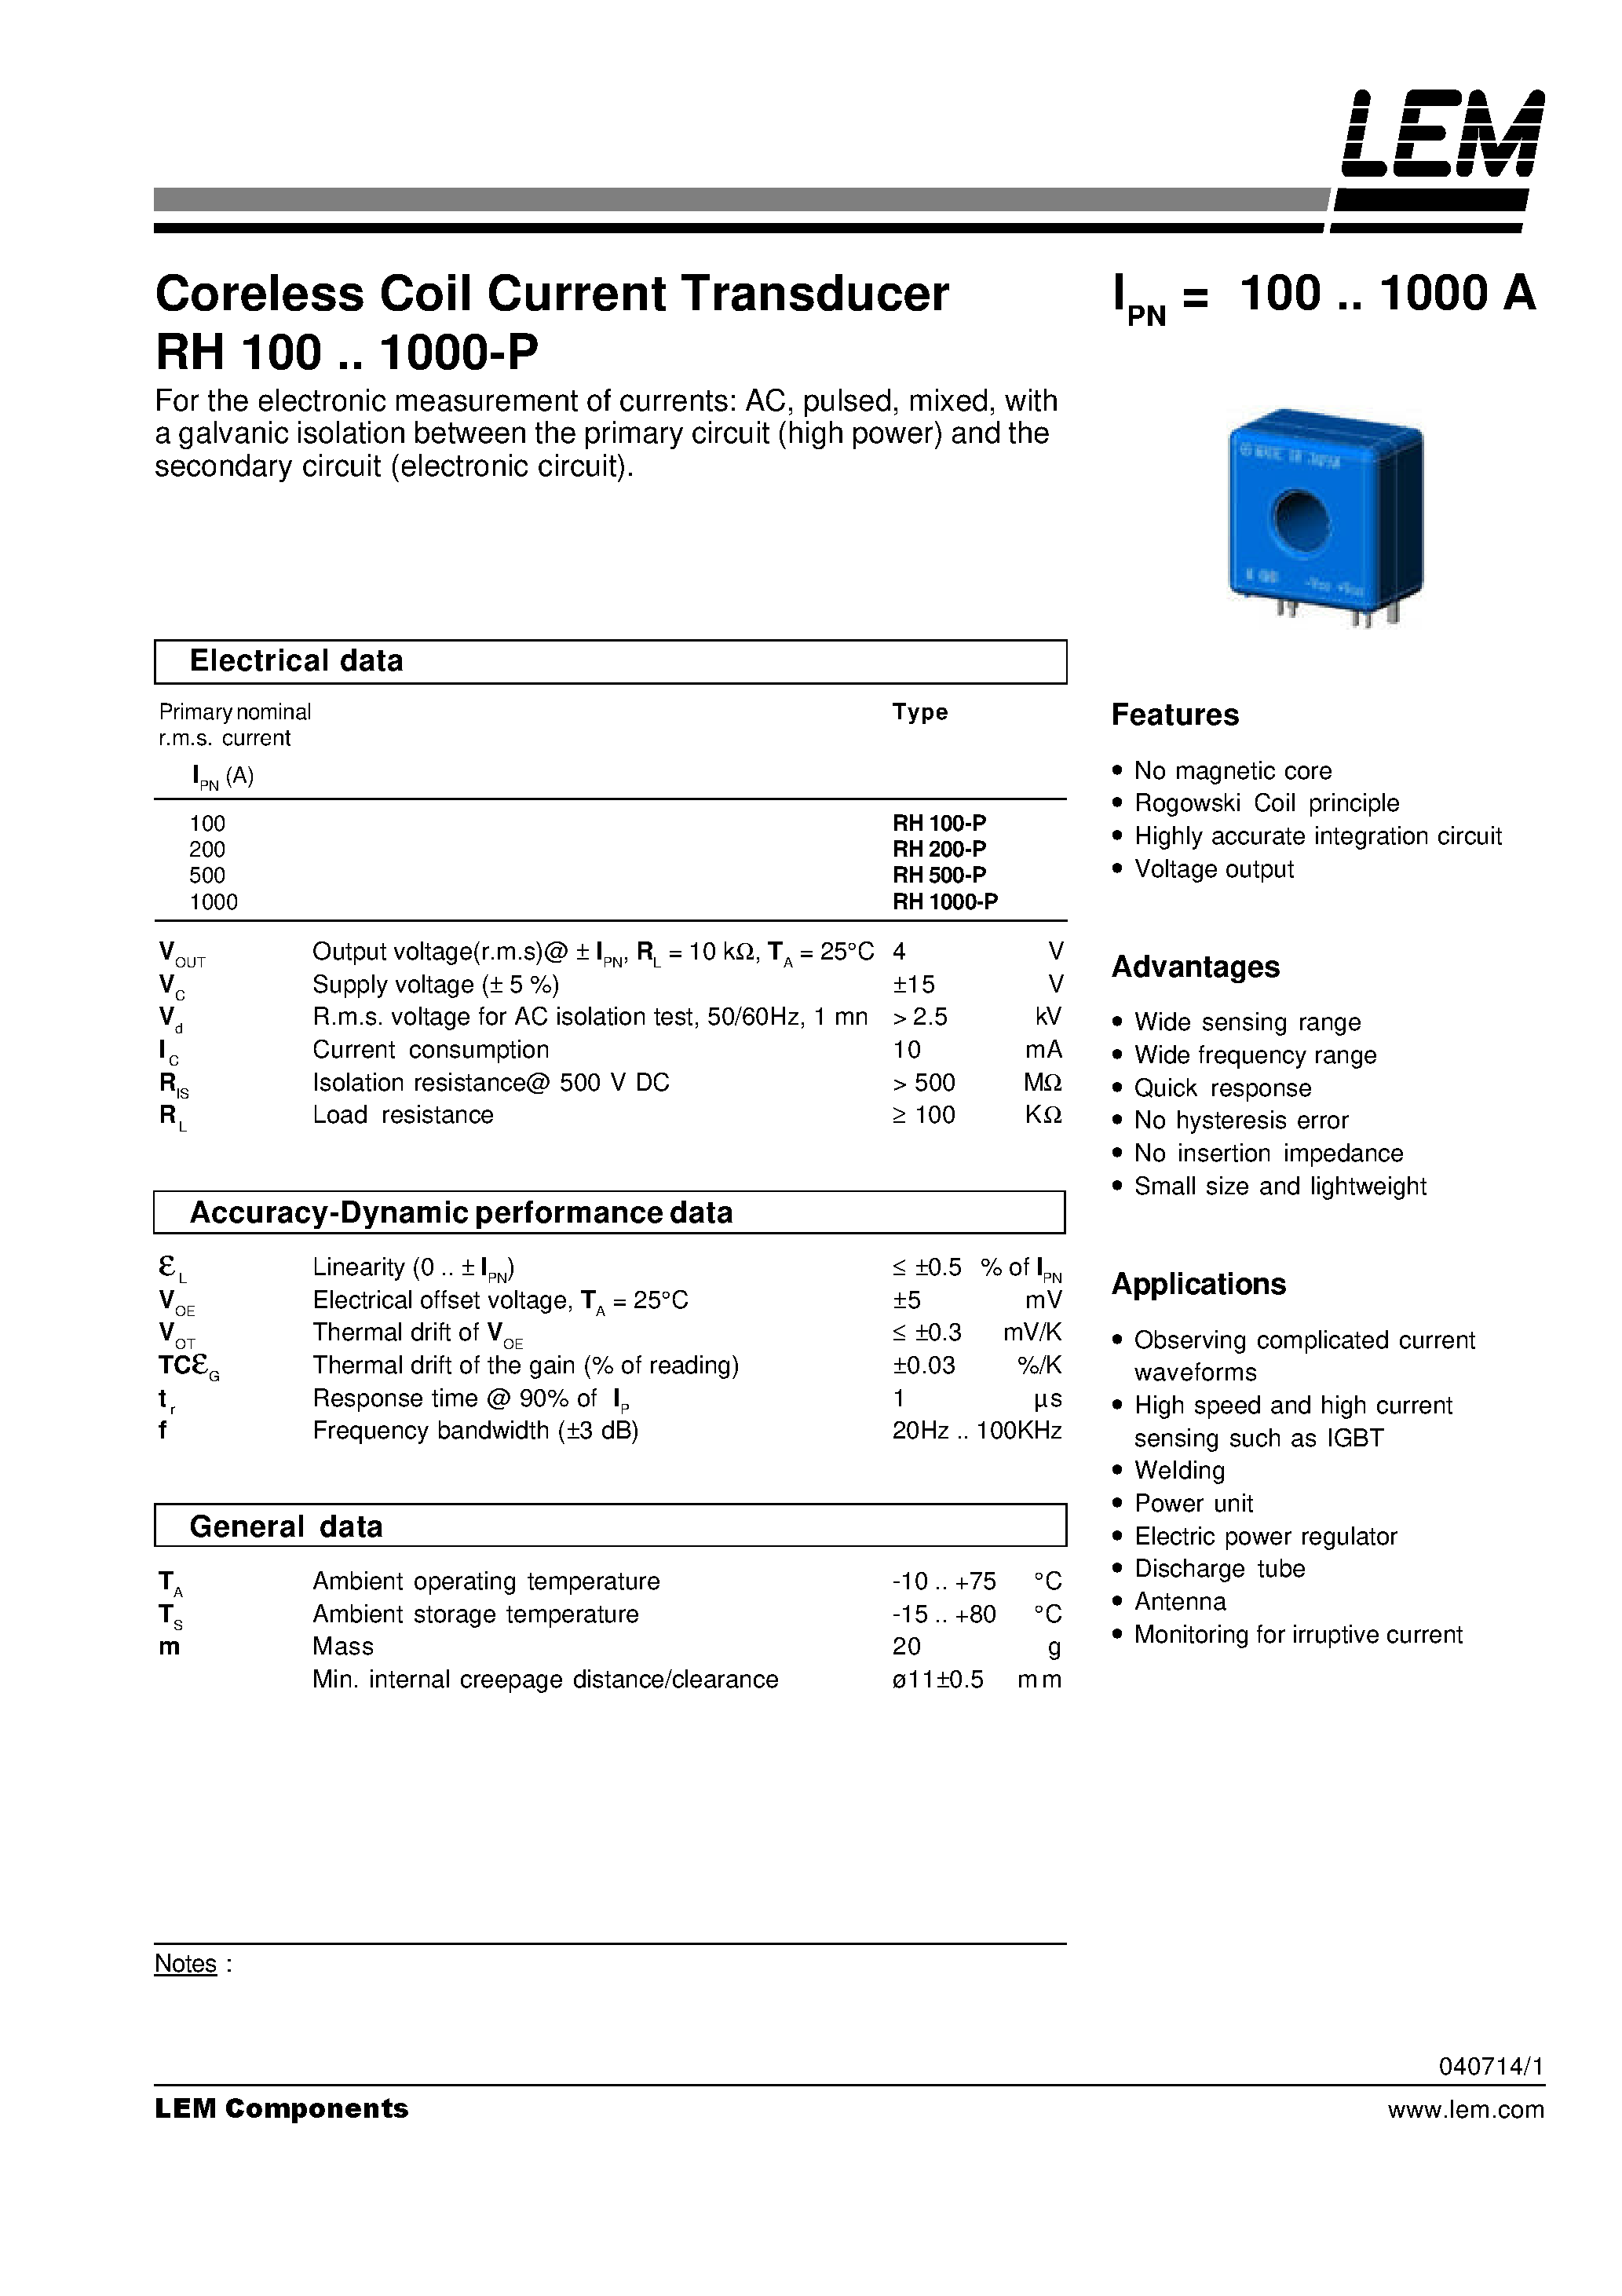 Datasheet RH500-P - Coreless Coil Current Transducer RH 100~1000-P page 1